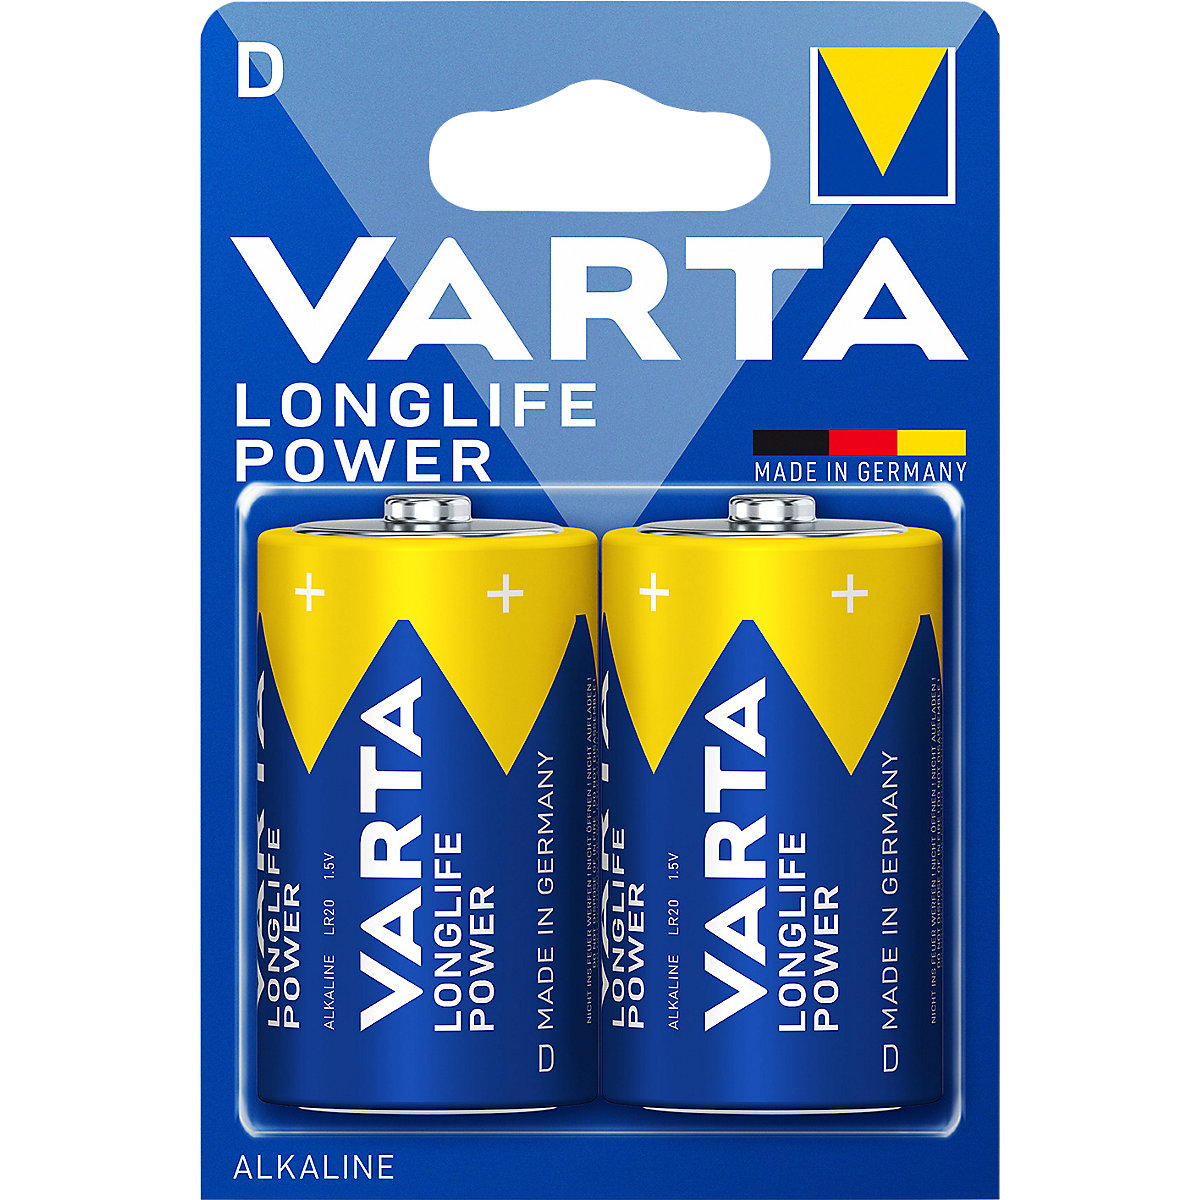 LONGLIFE power battery – VARTA